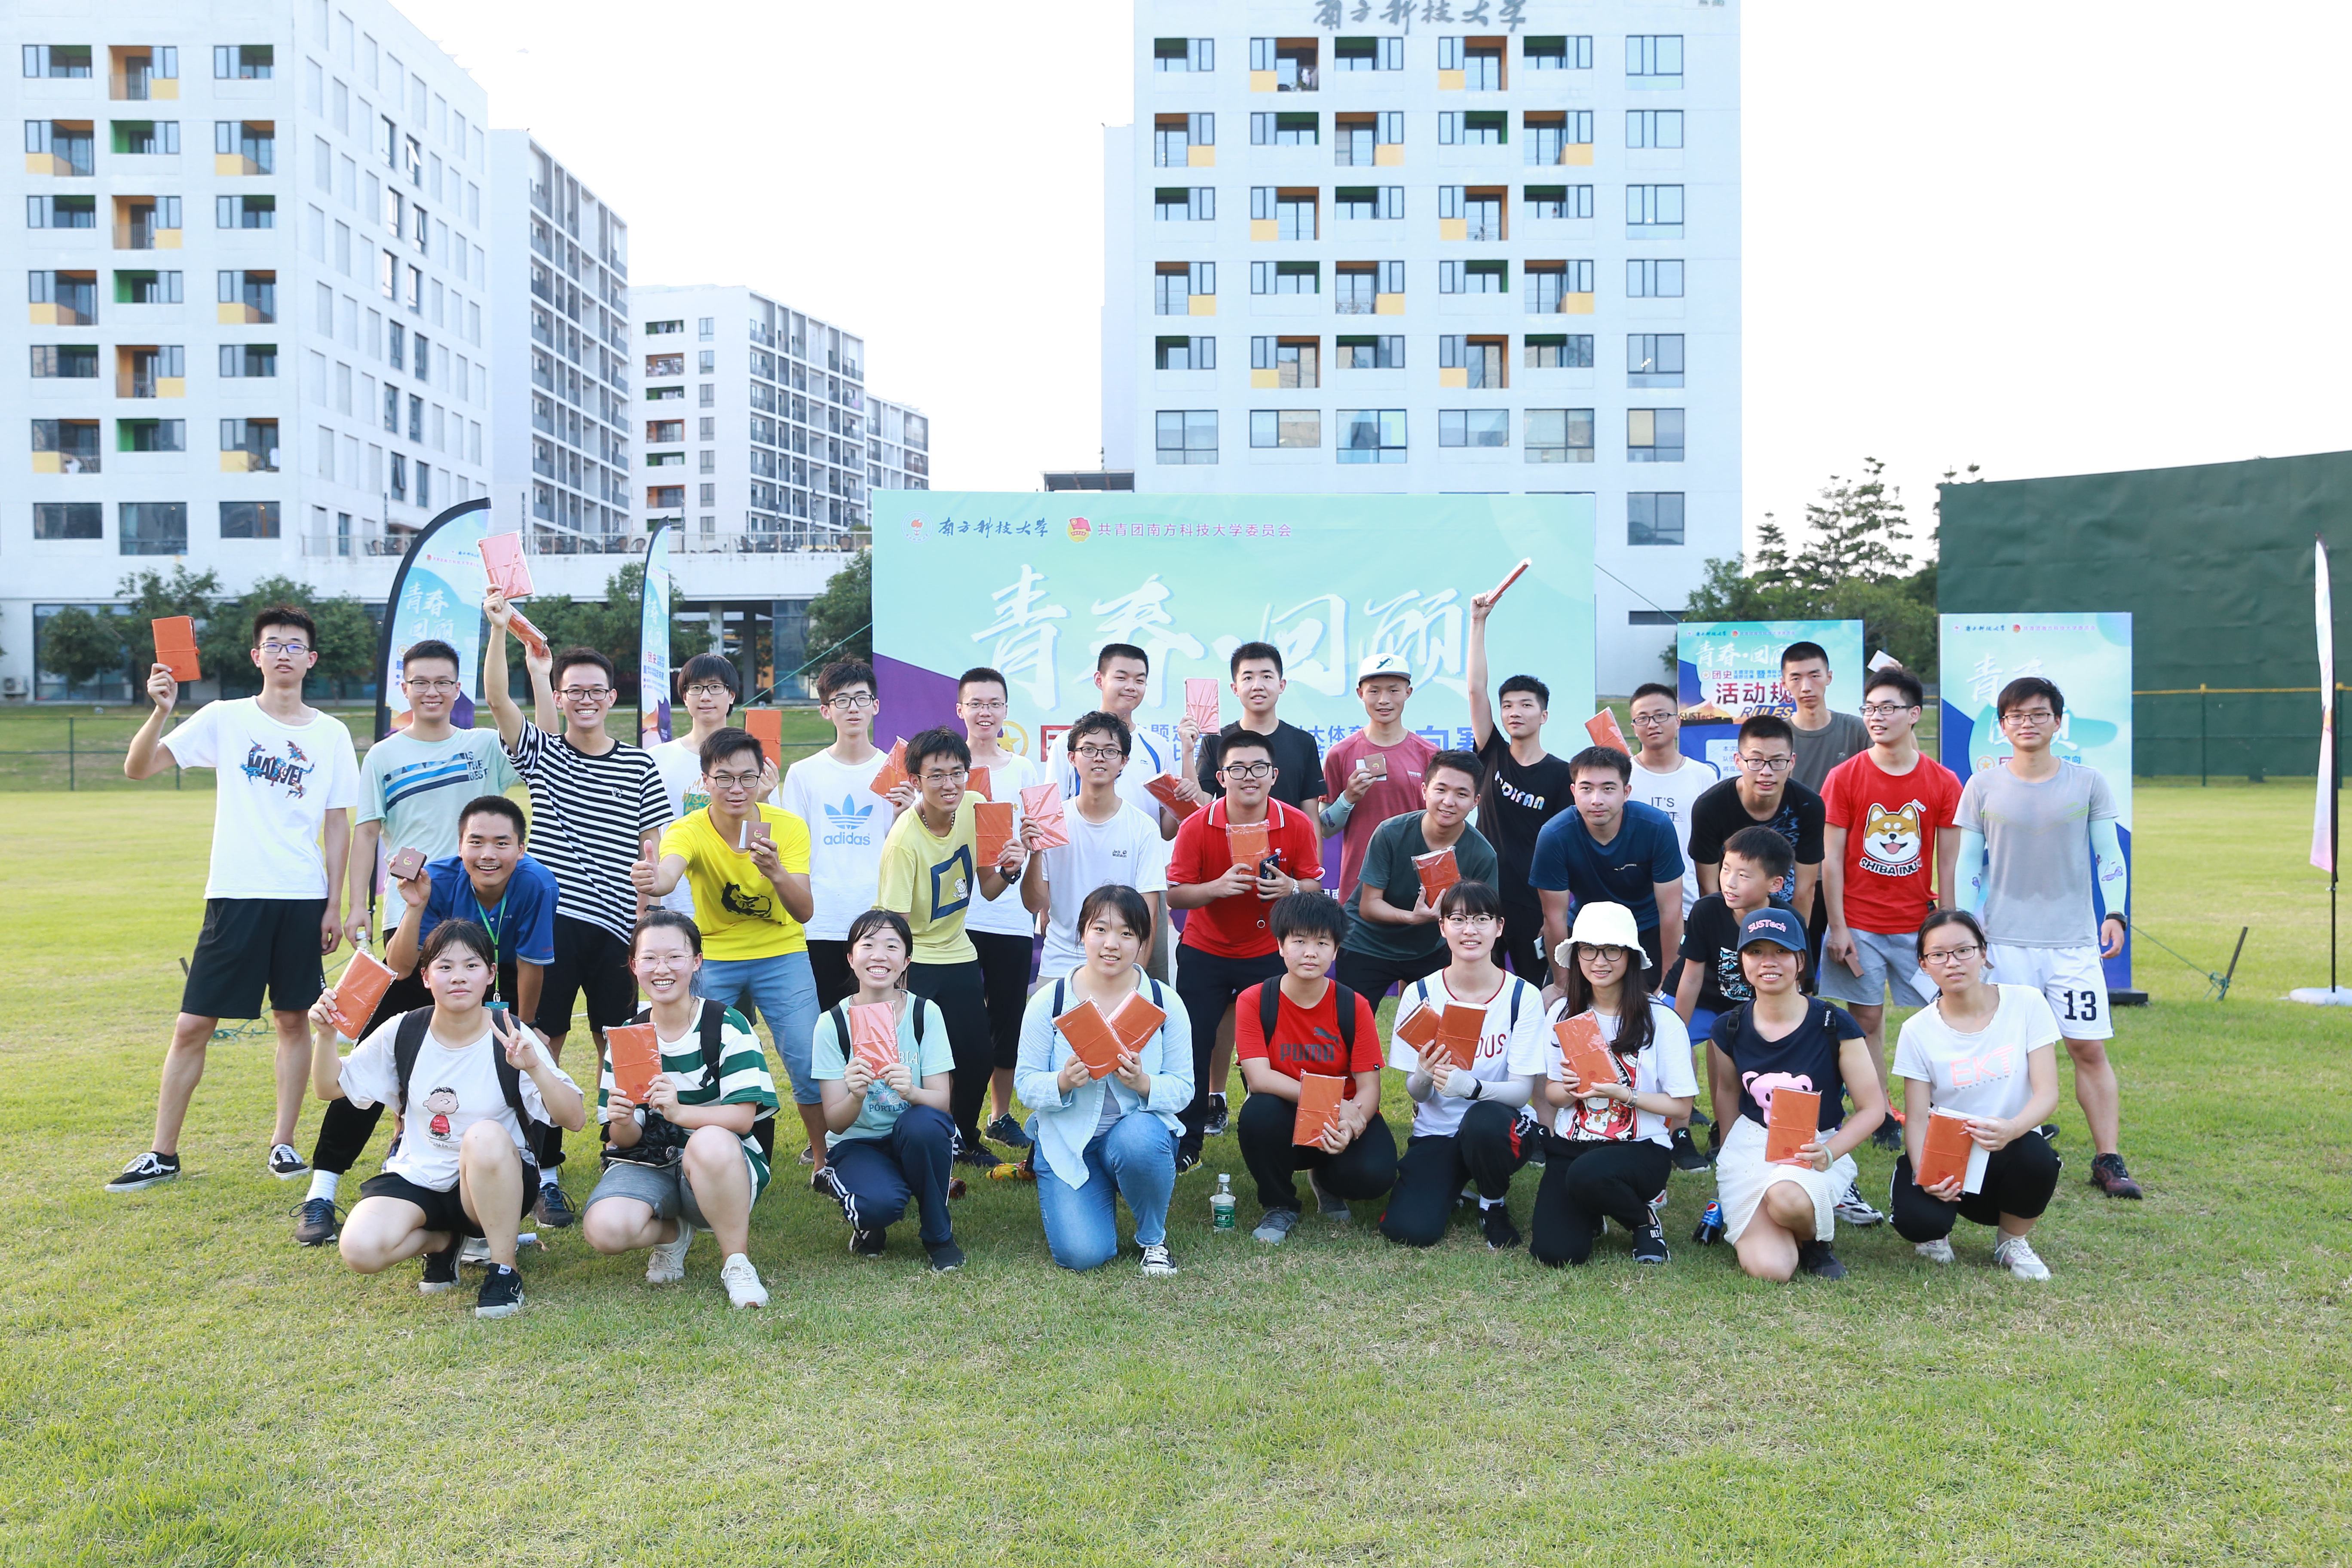 Outdoor sports festival focuses on orienteering